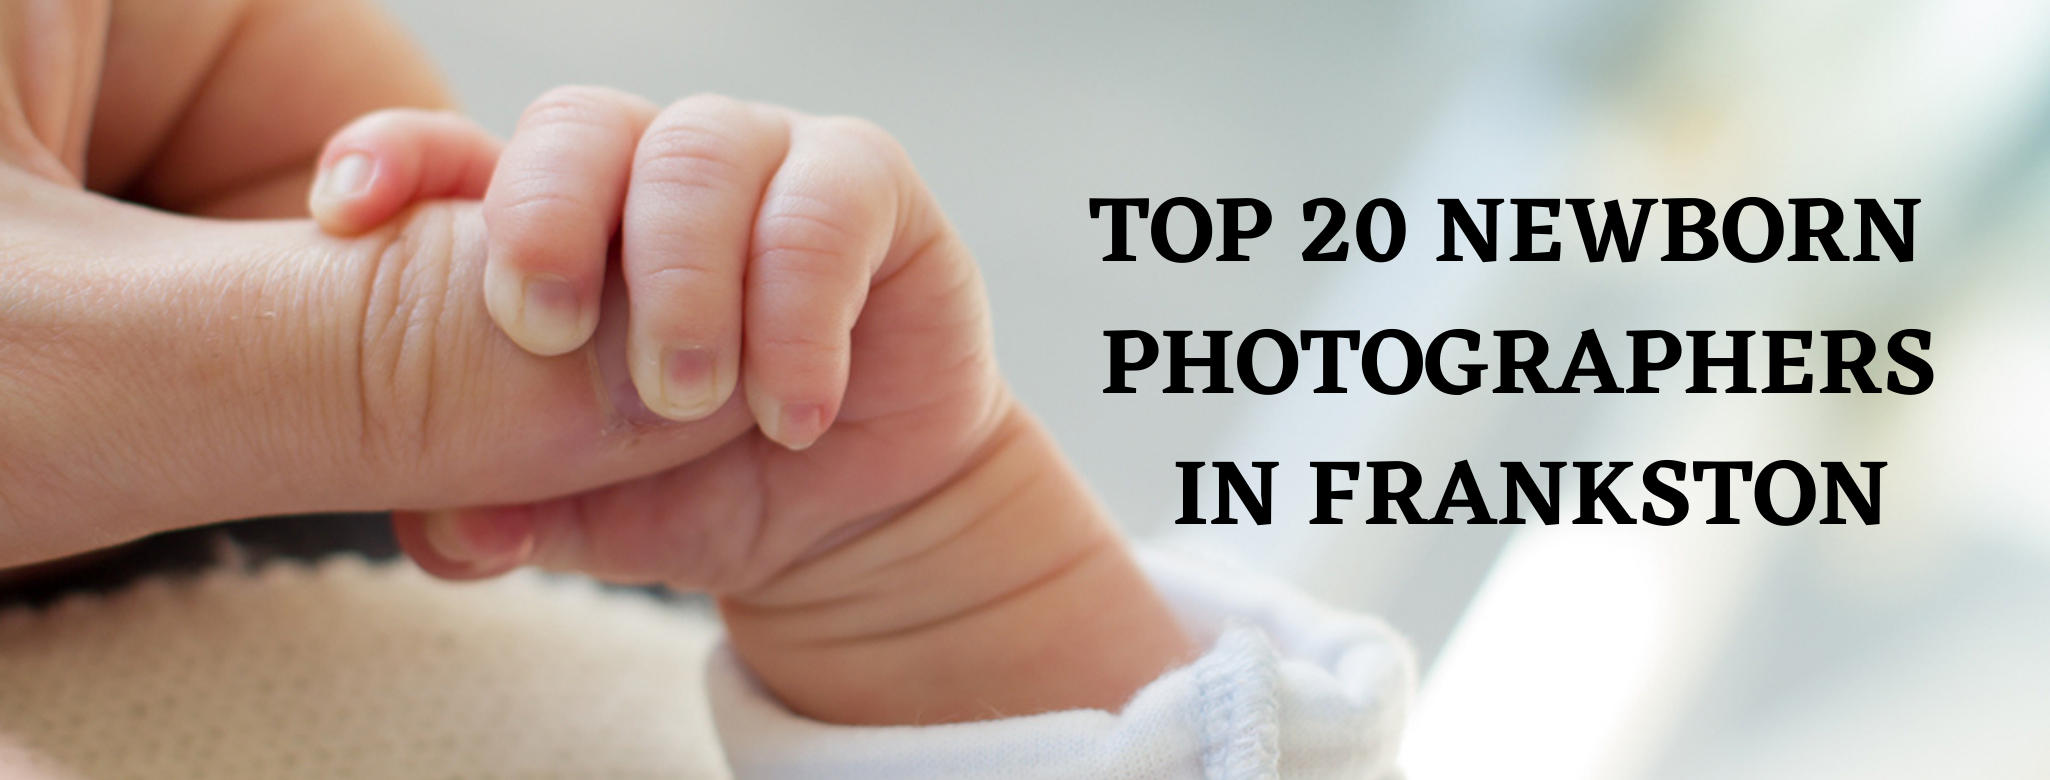 TOP 20 NEWBORN PHOTOGRAPHERS FRANKSTON